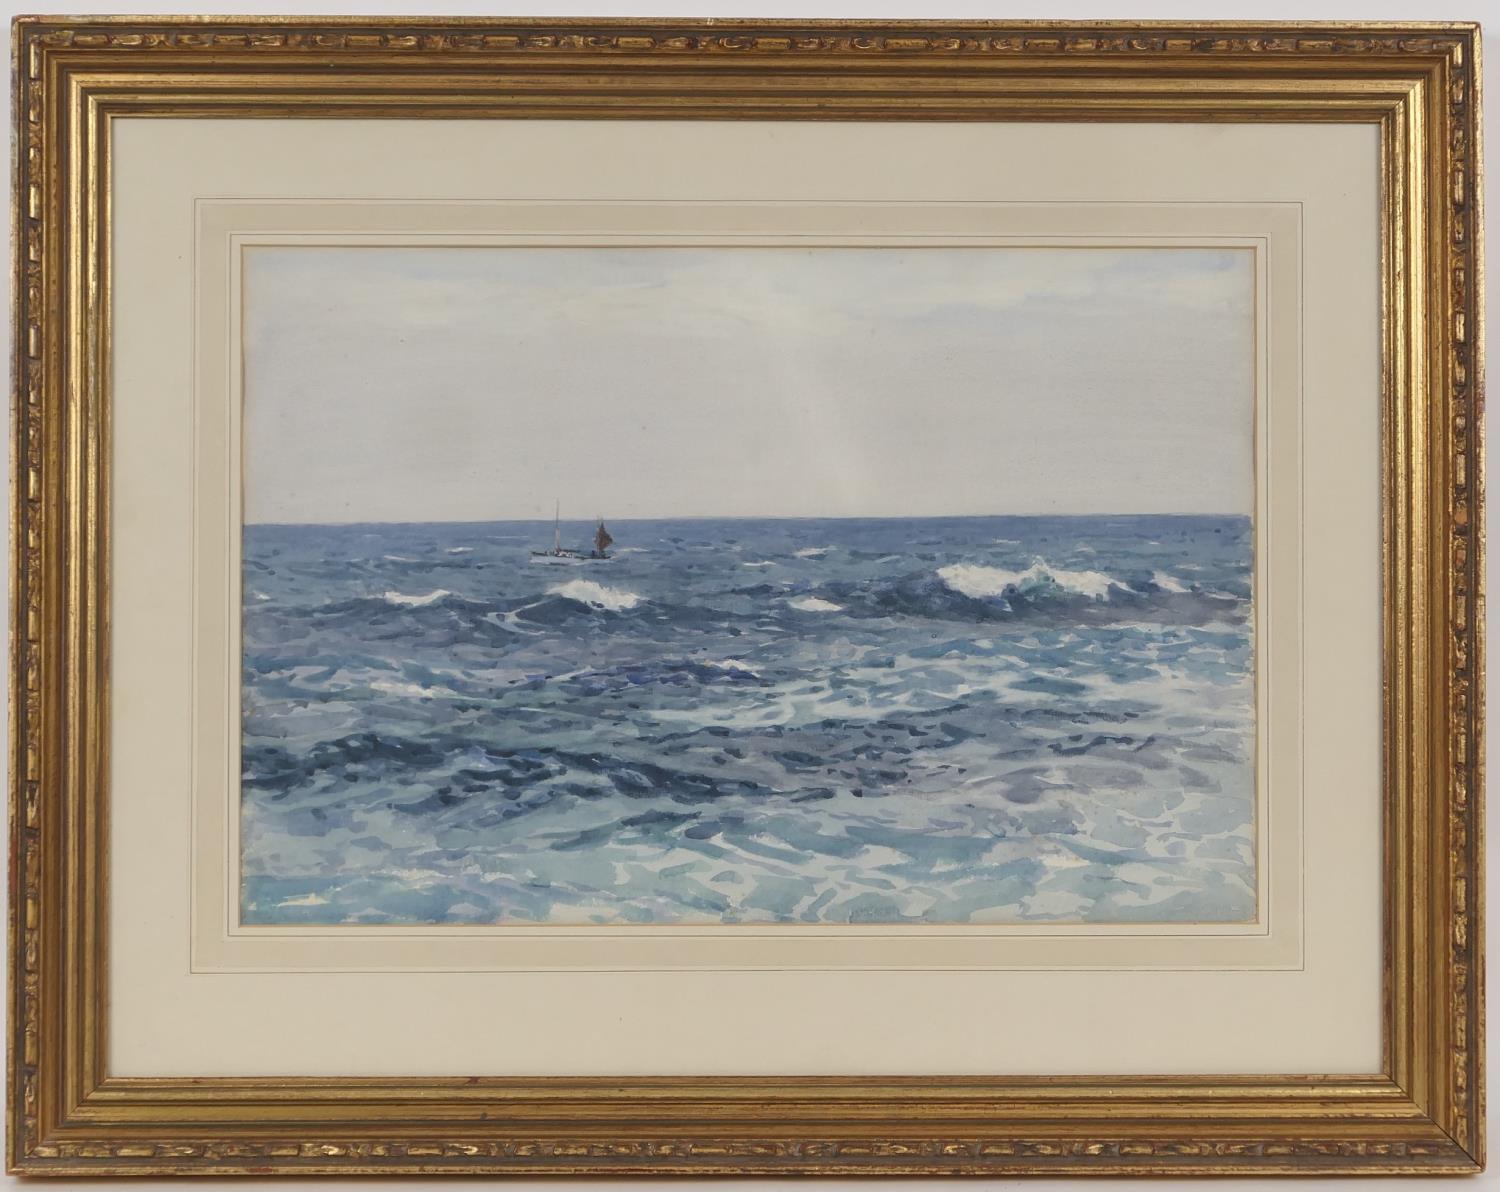 Norman Wilkinson (1878-1971), Fishing vessel off Greenaway Beach, Padstow, watercolour, titled